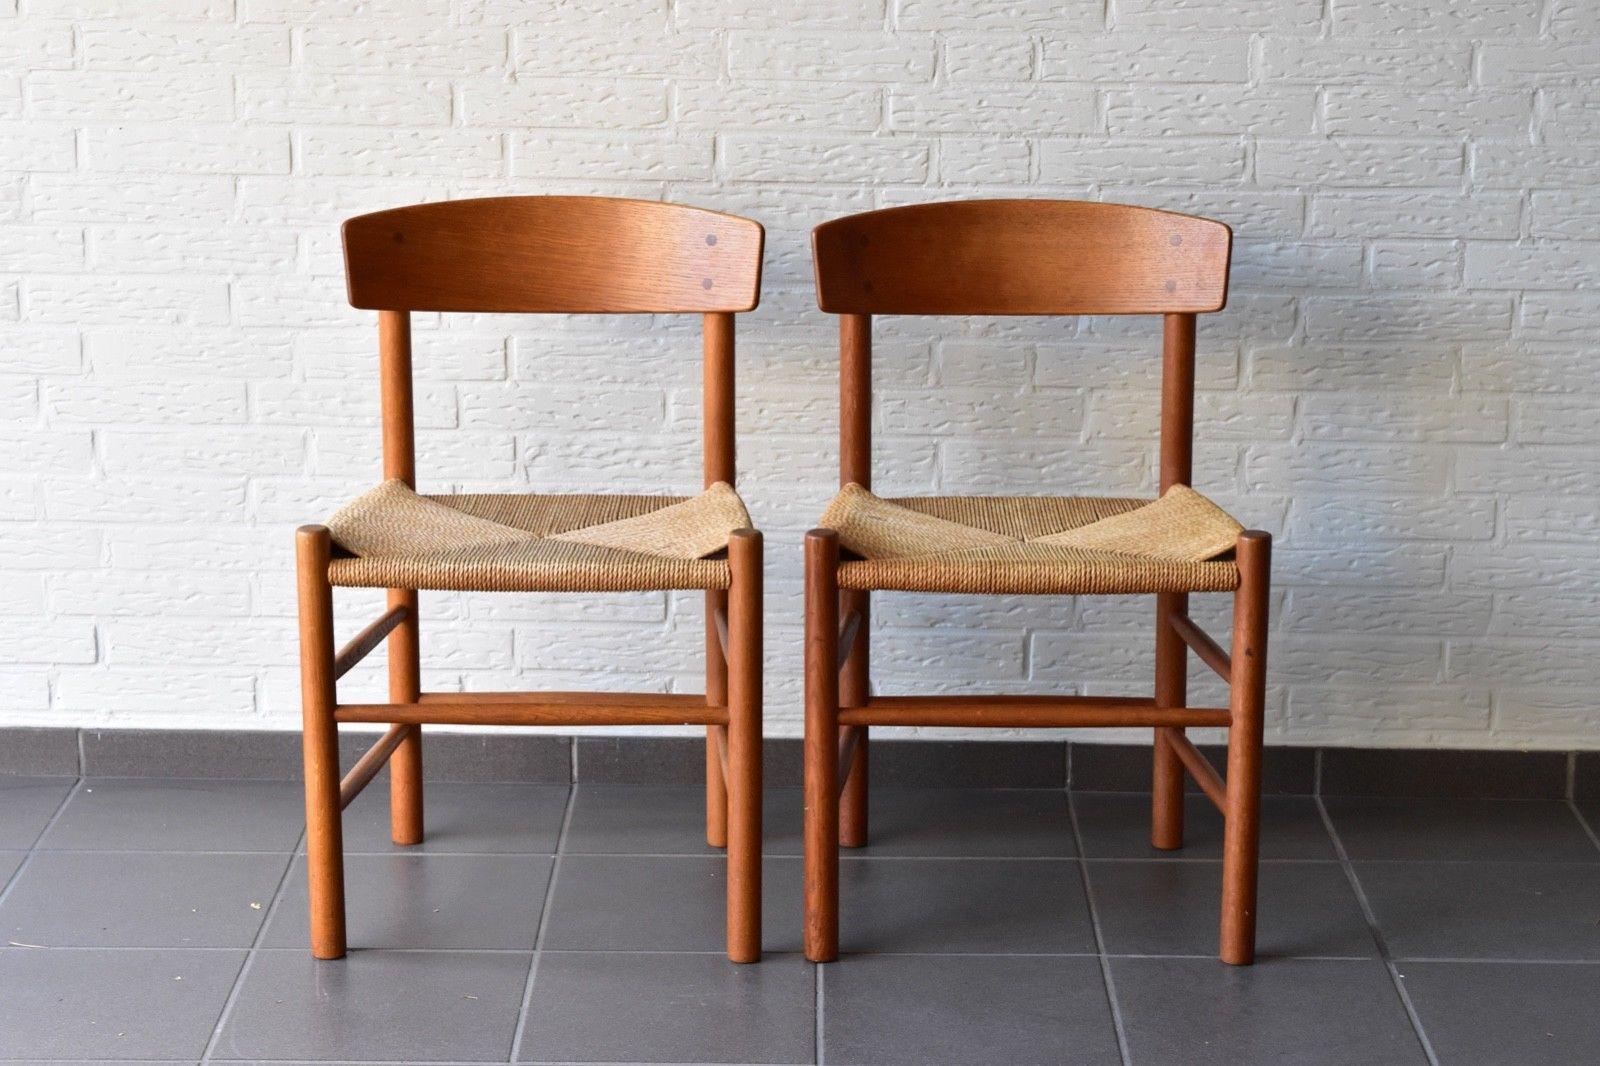 Vintage Oak Børge Mogensen Chairs Produced by J39 FDB Møbler, Denmark 1